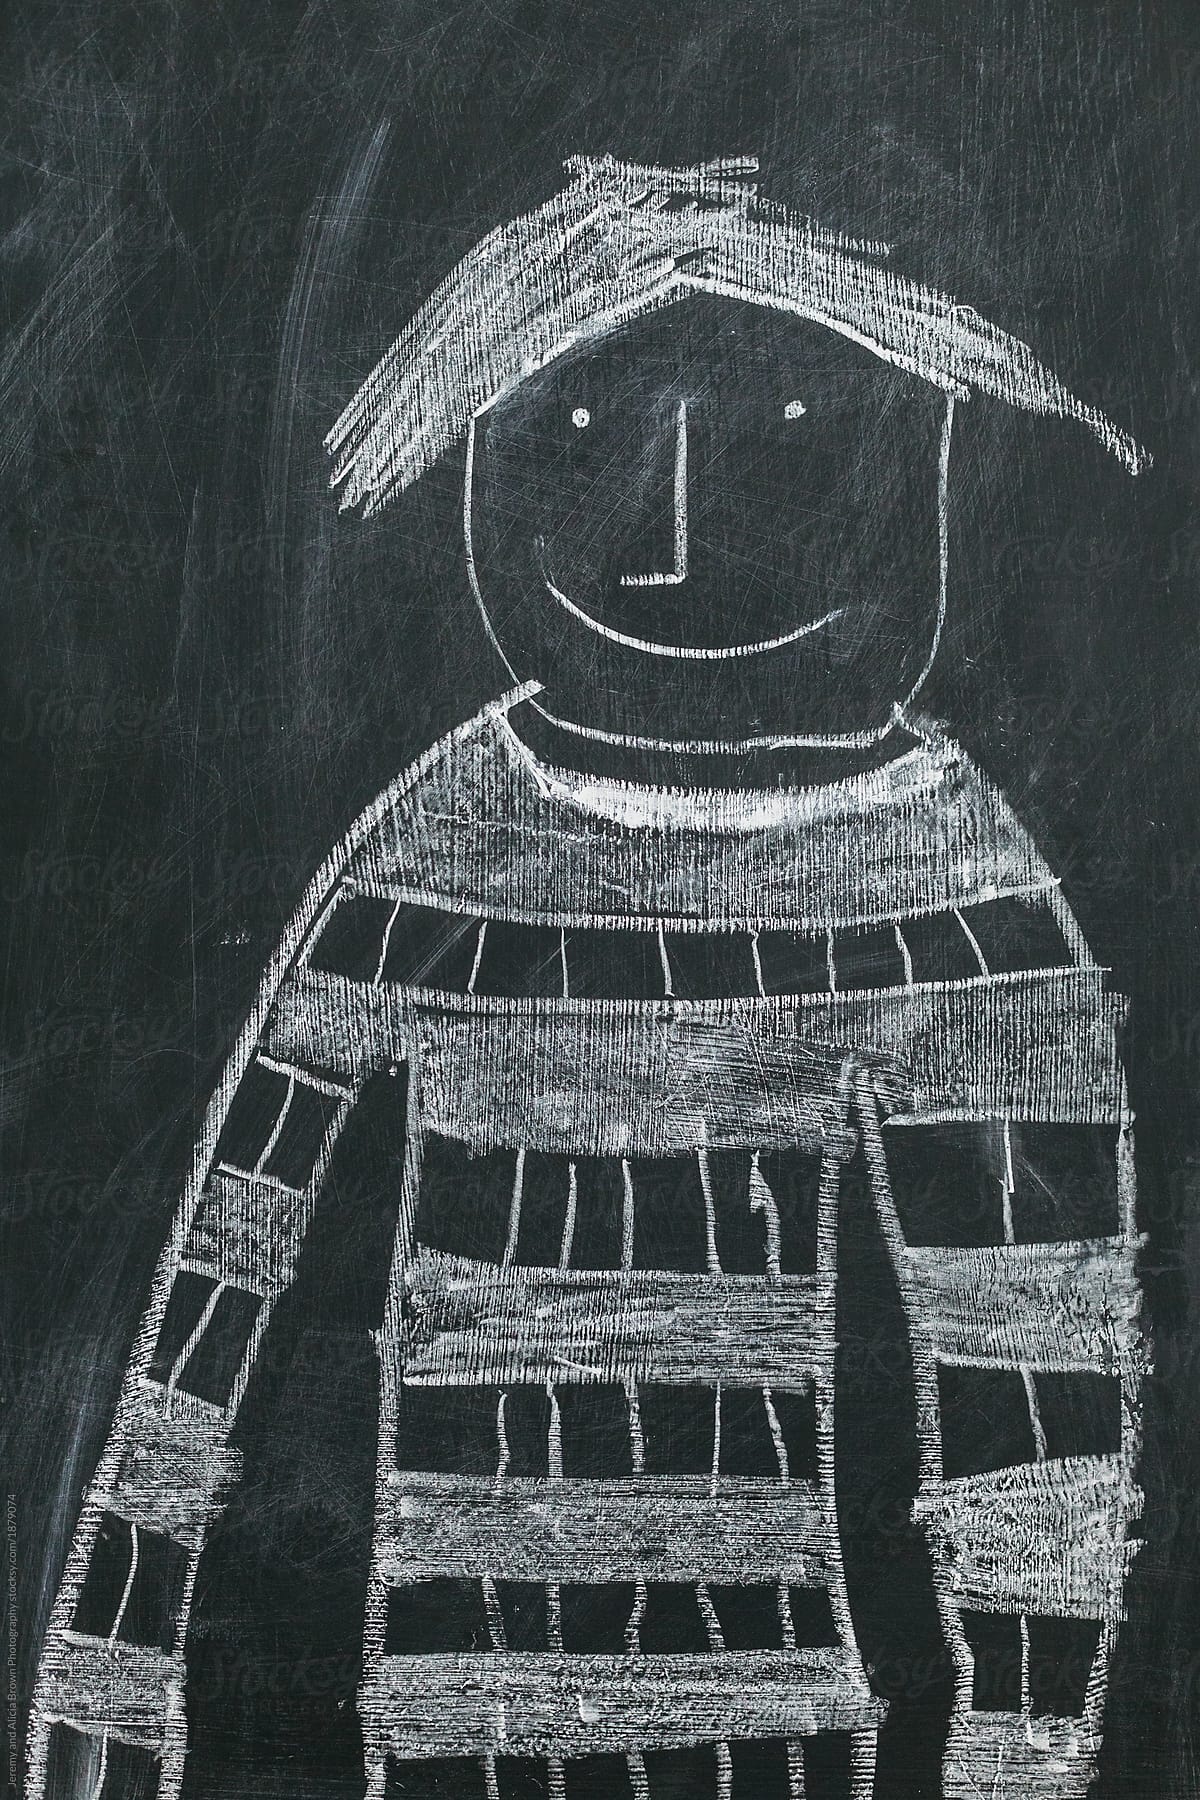 Child's chalkboard drawing